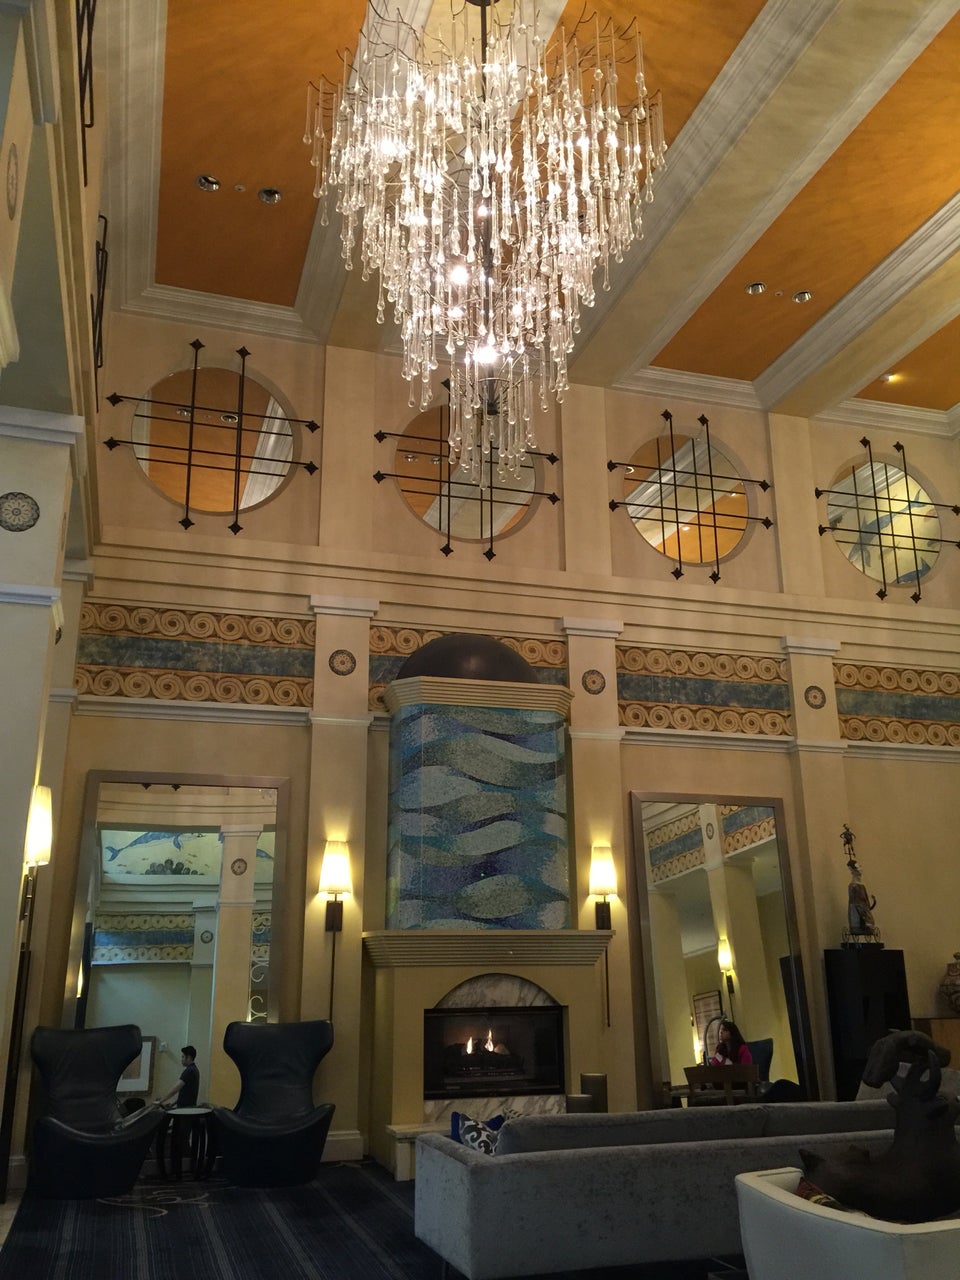 Photo of Hotel Monaco Seattle